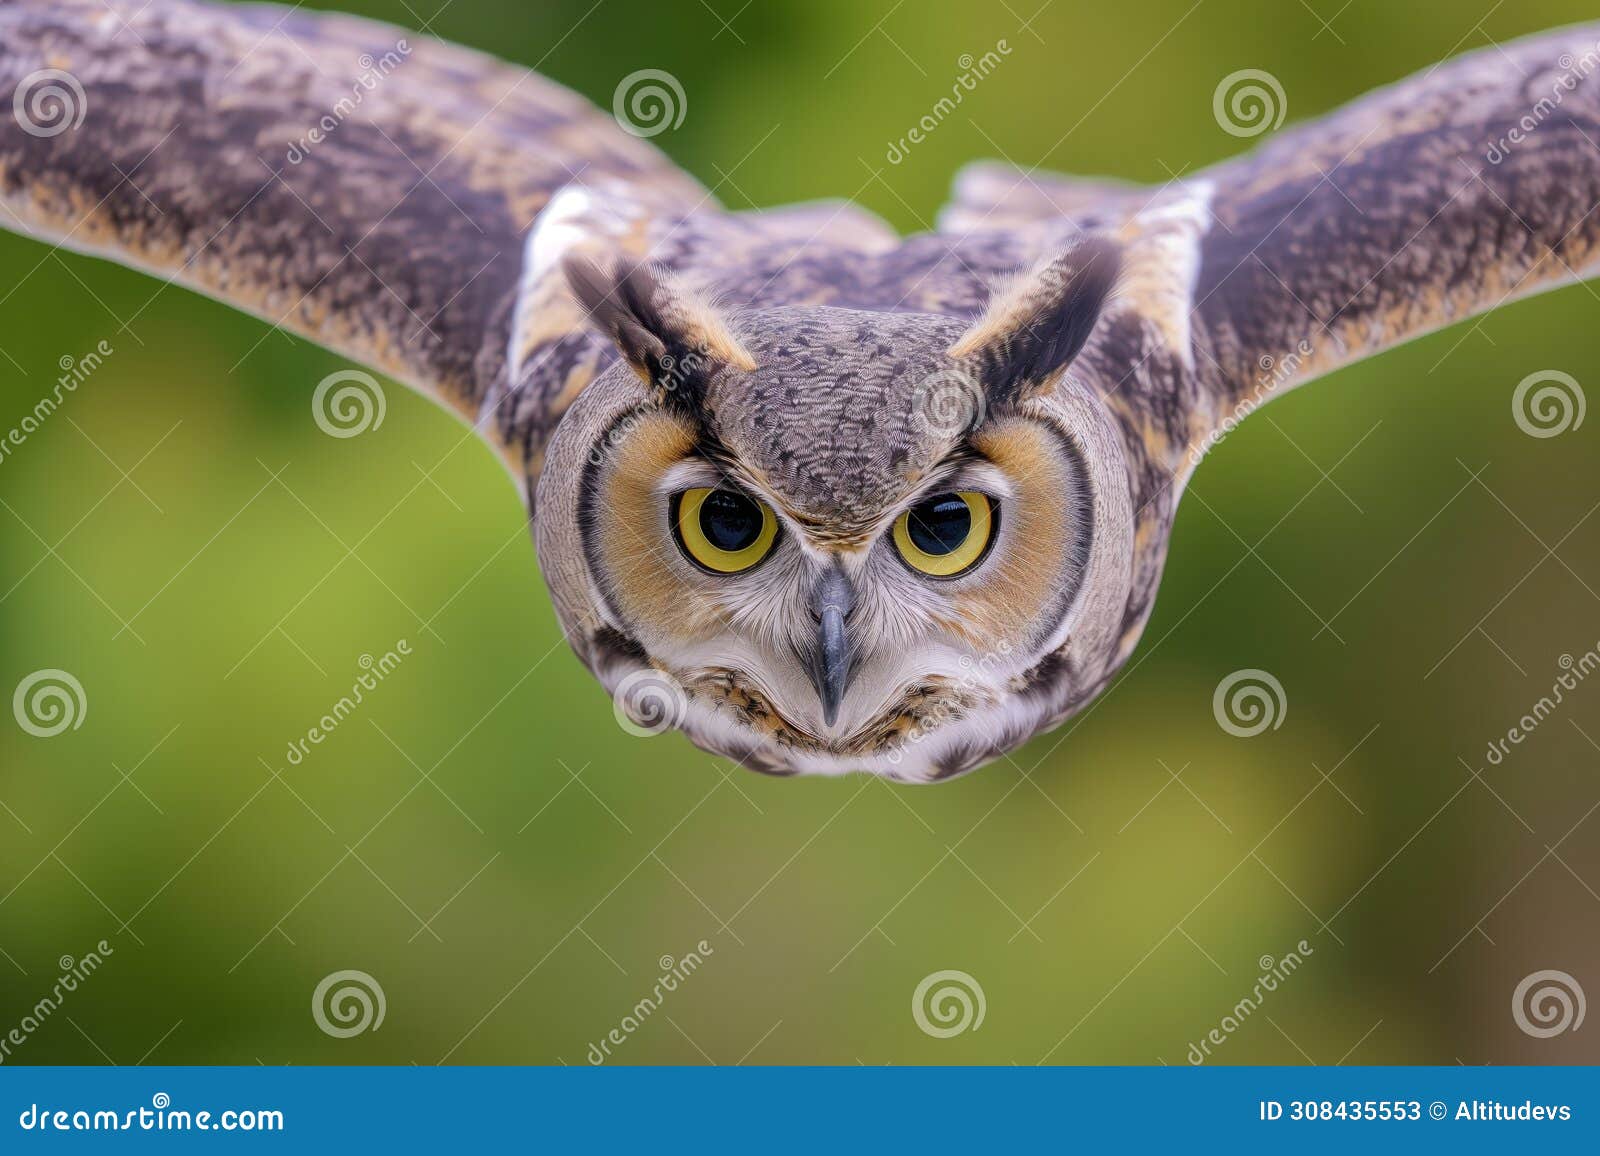 close midflight capture, owls face details sharp, background blurred